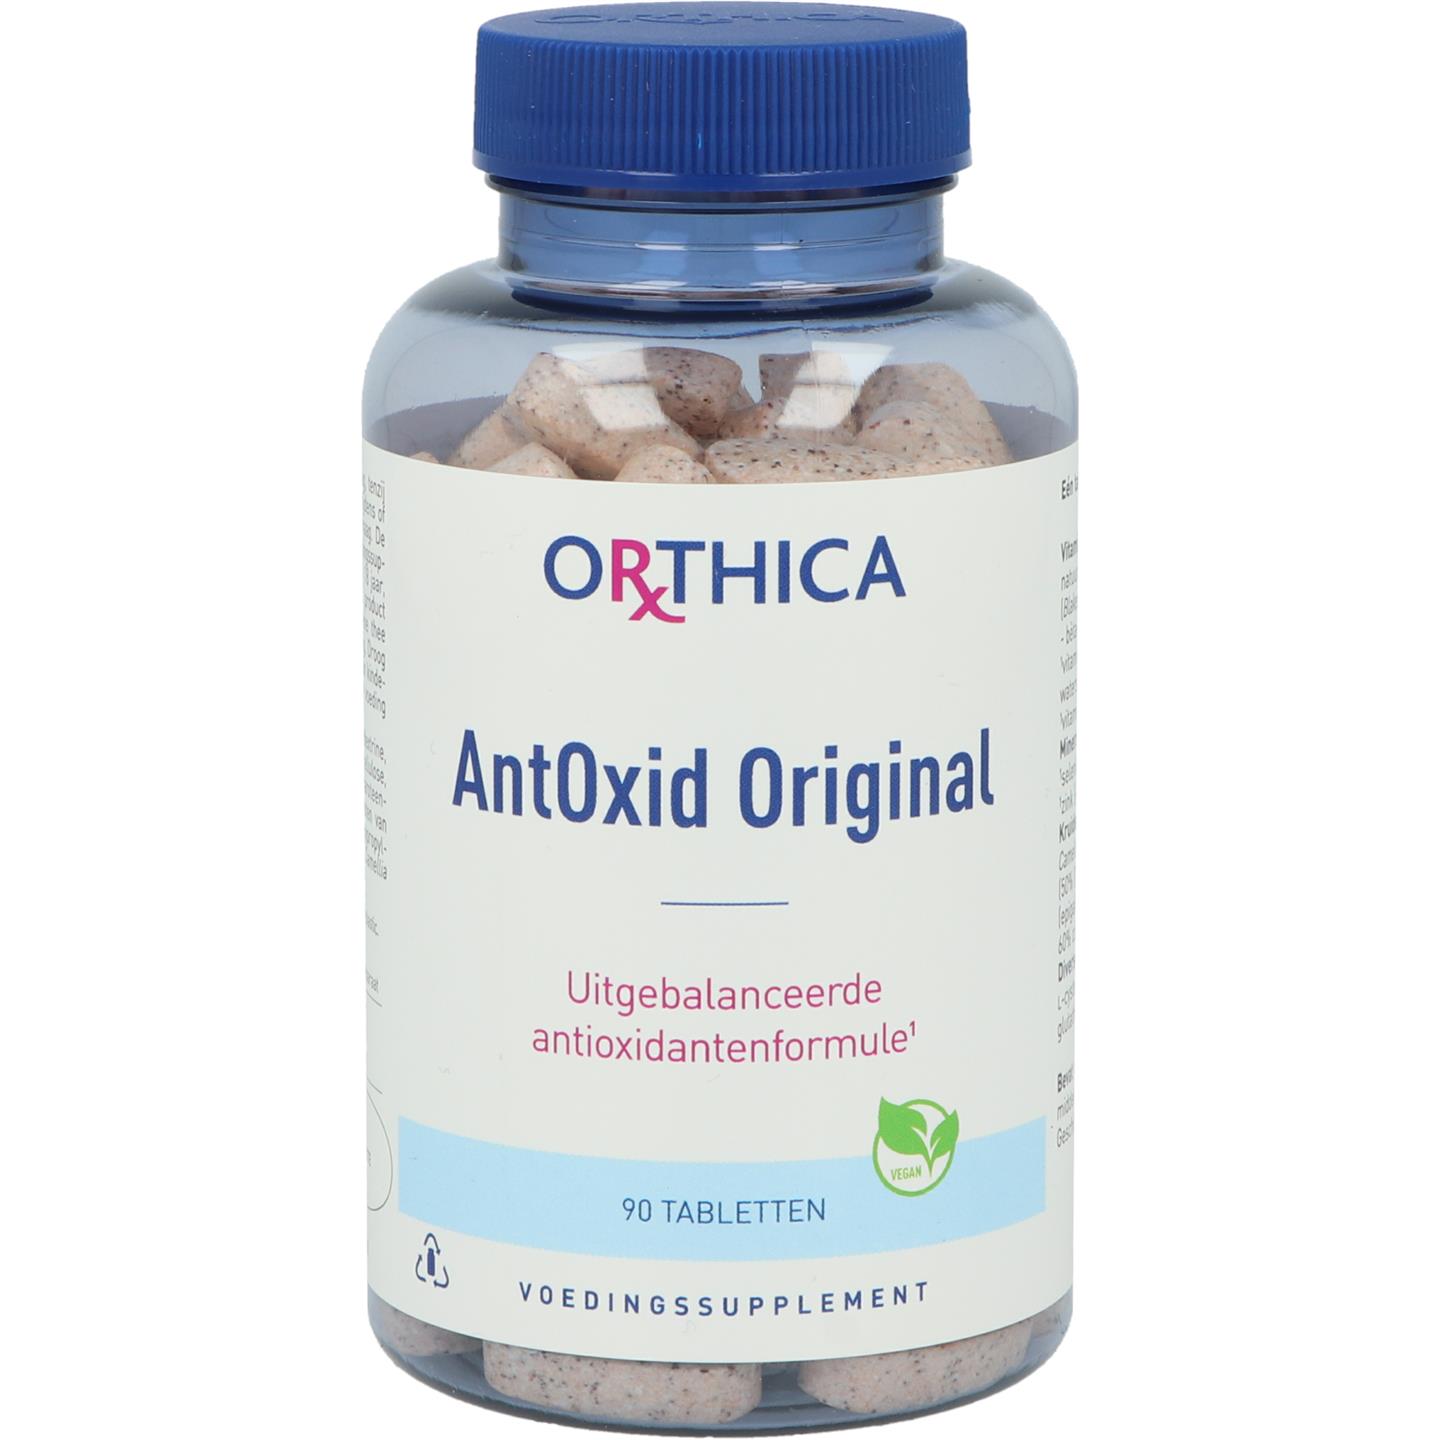 AntOxid Original